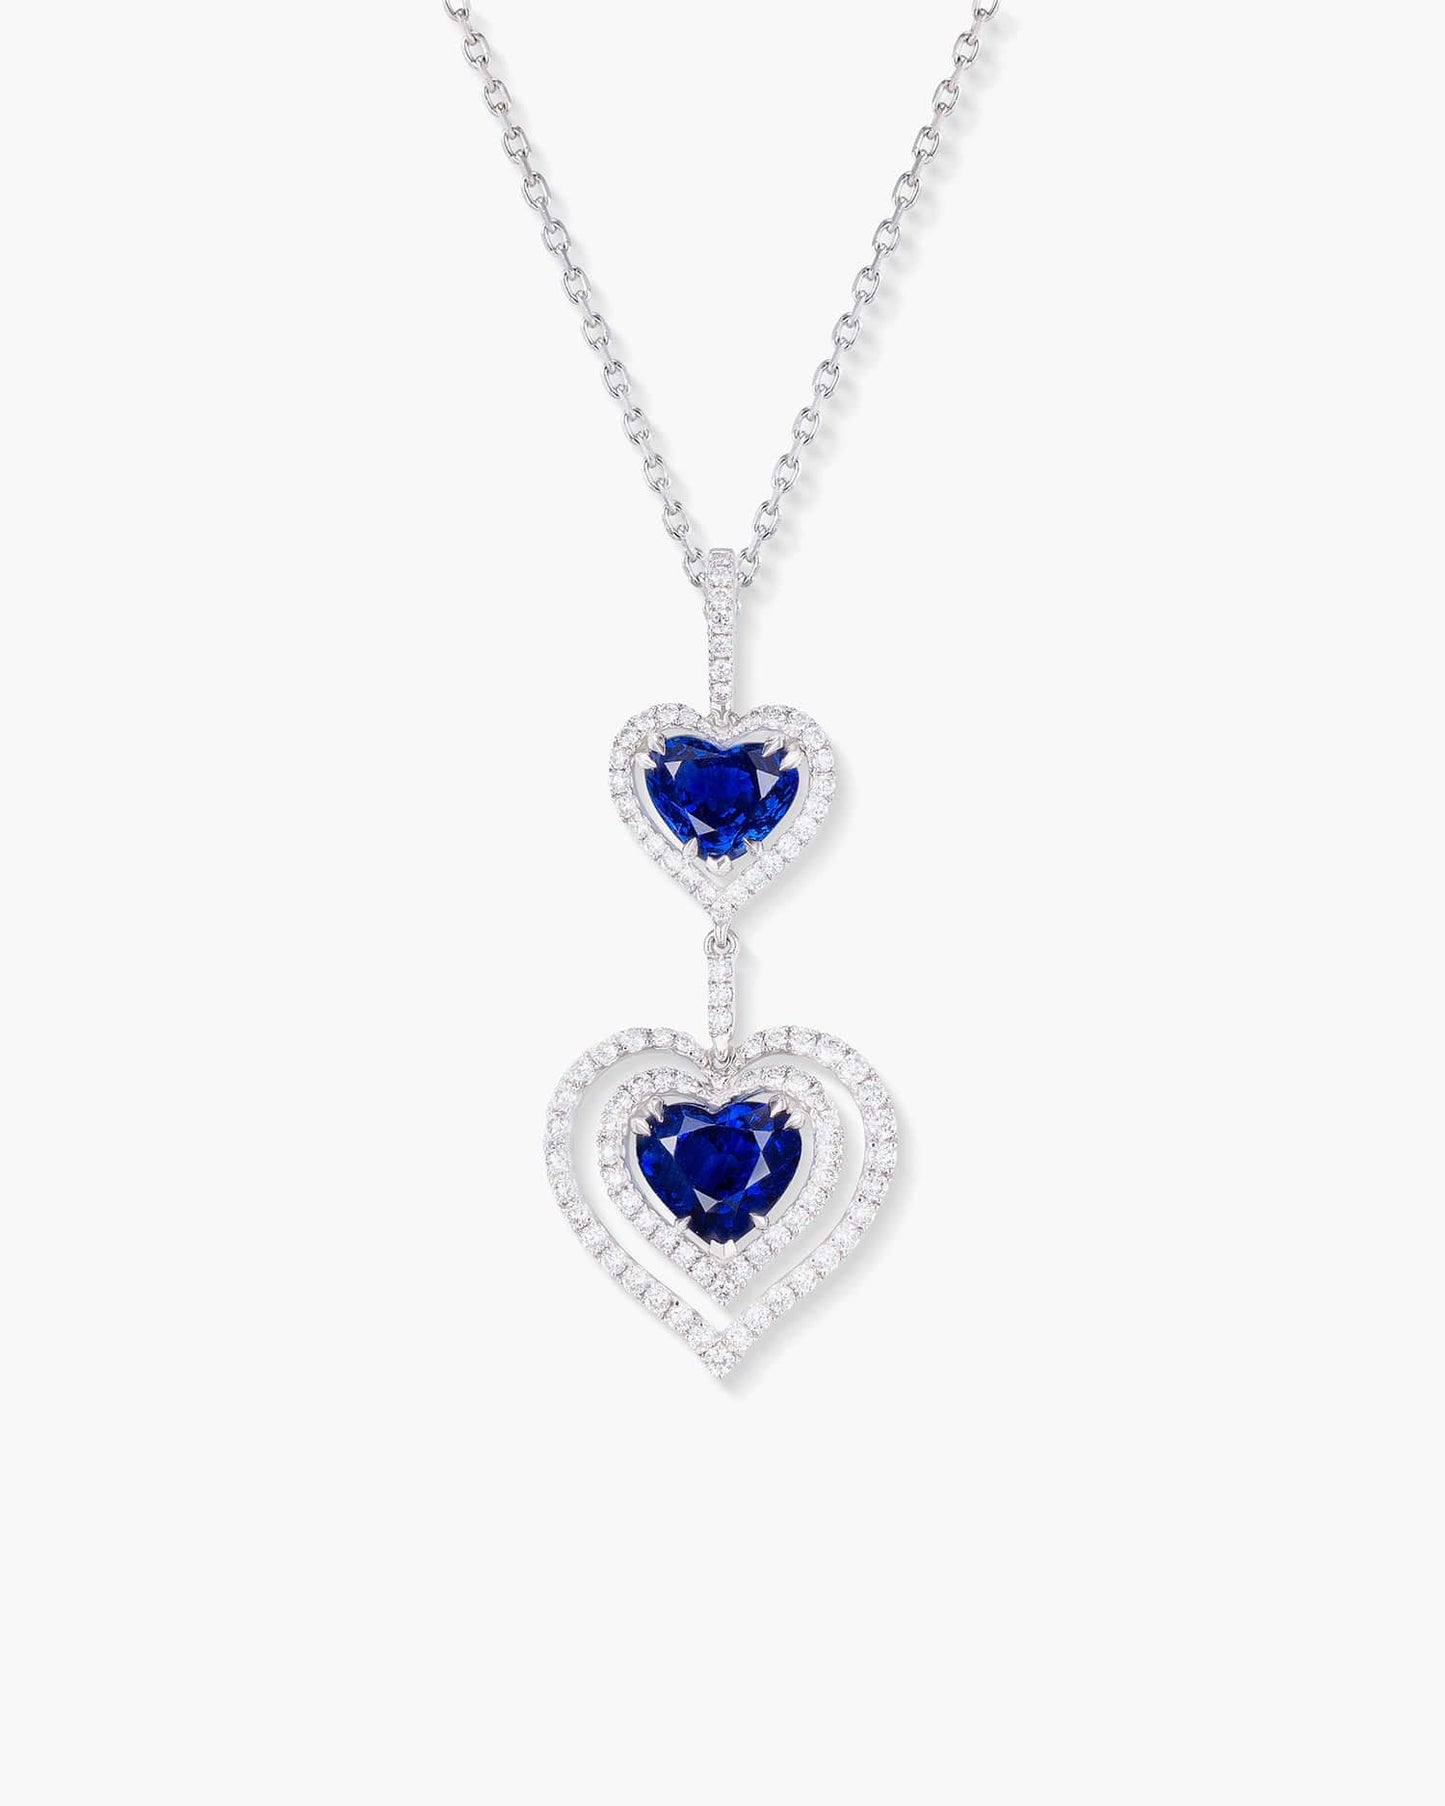 Heart Shape Ceylon Sapphire and Diamond Pendant Necklace, 3.92 carats